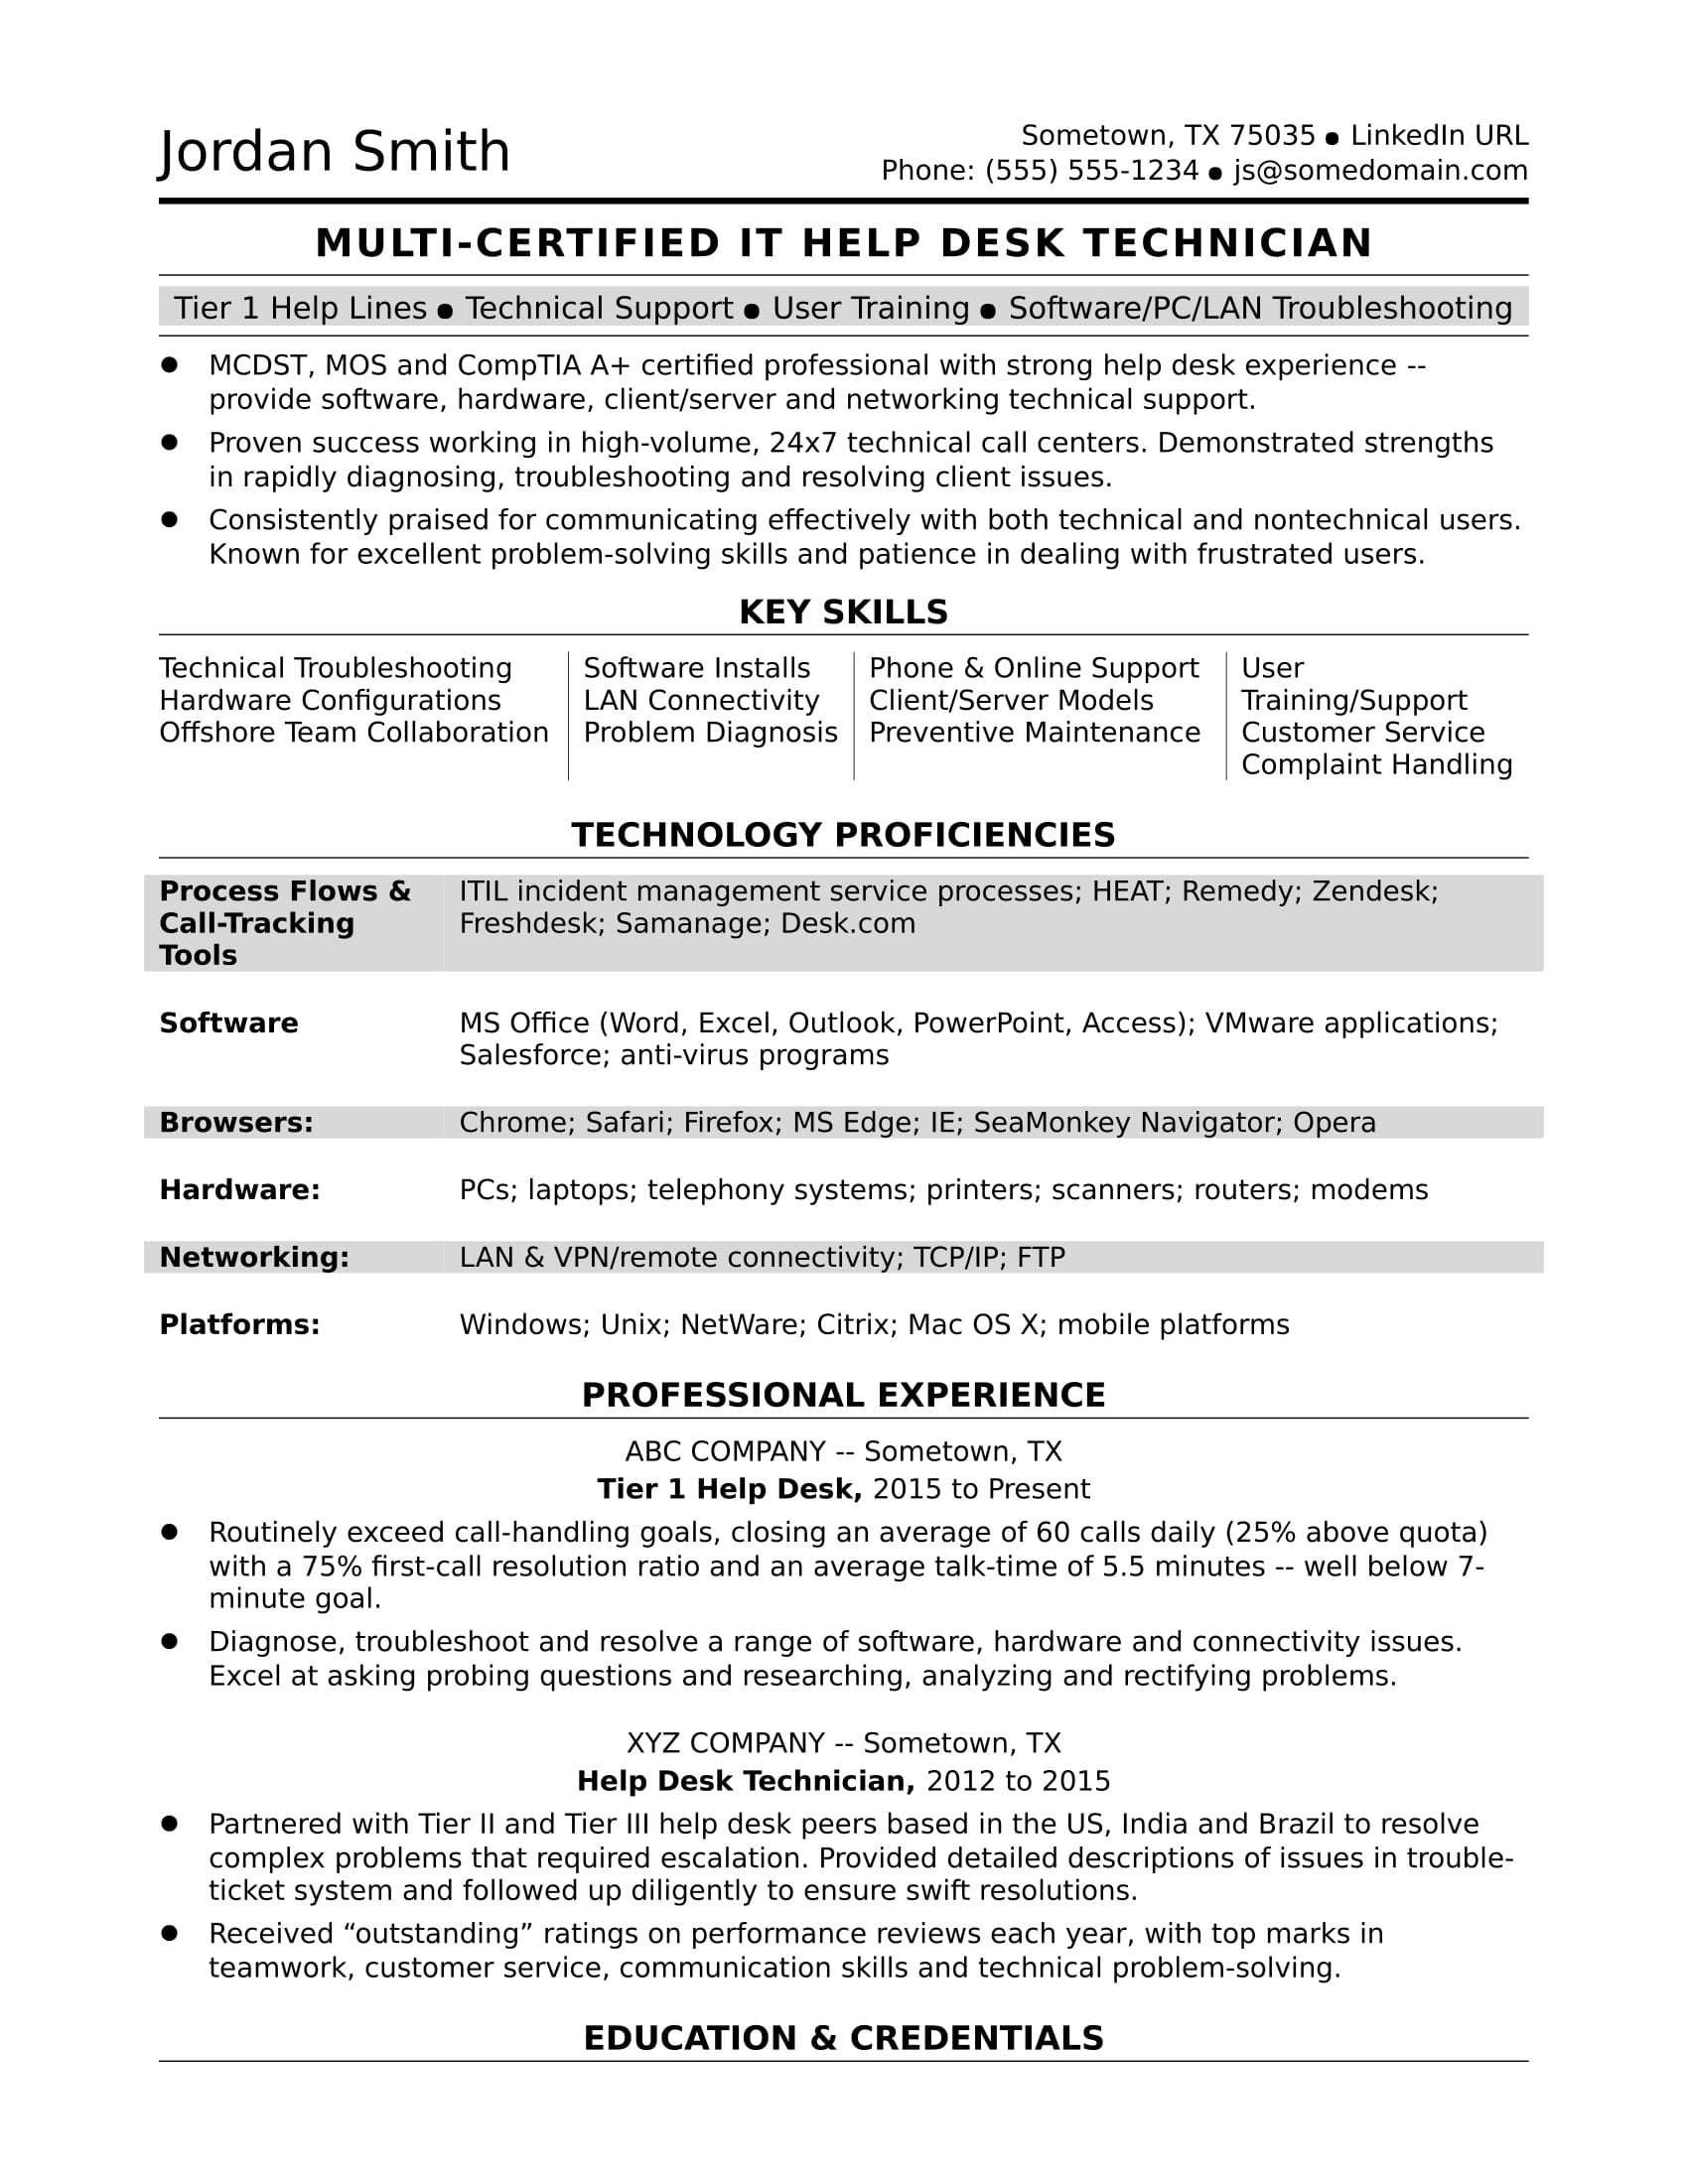 Sample Resume for Us It Jobs Sample Resume for A Midlevel It Help Desk Professional Monster.com